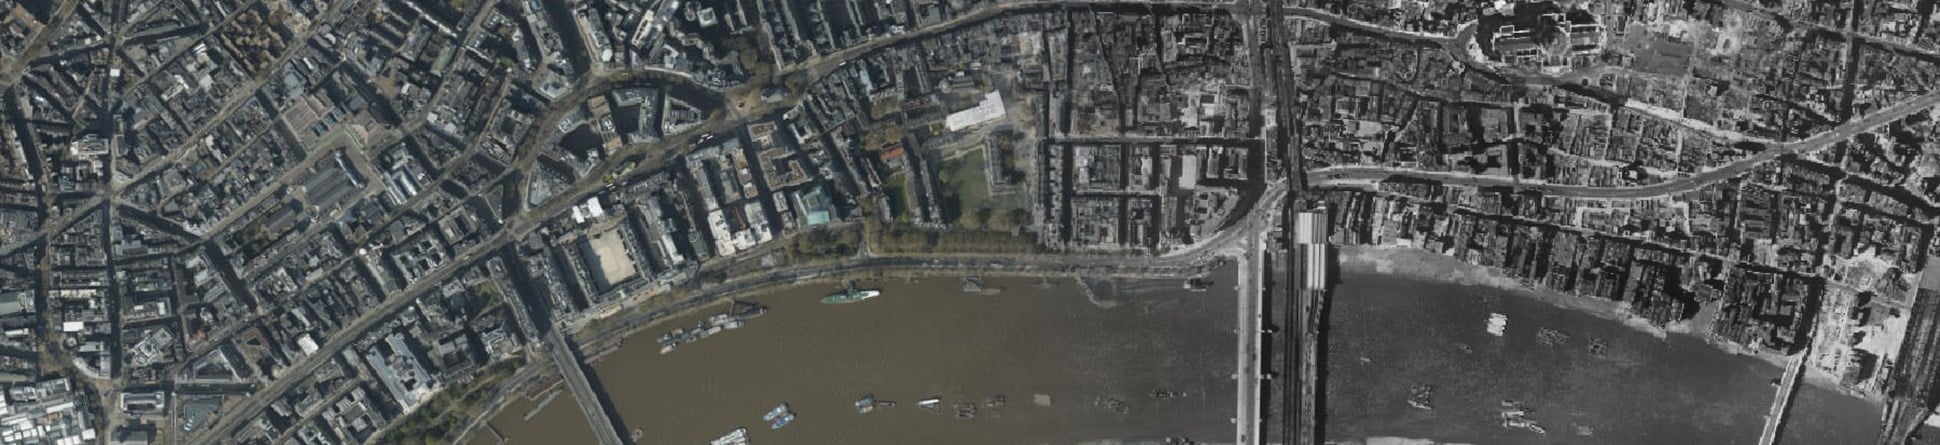 Aerial views of london